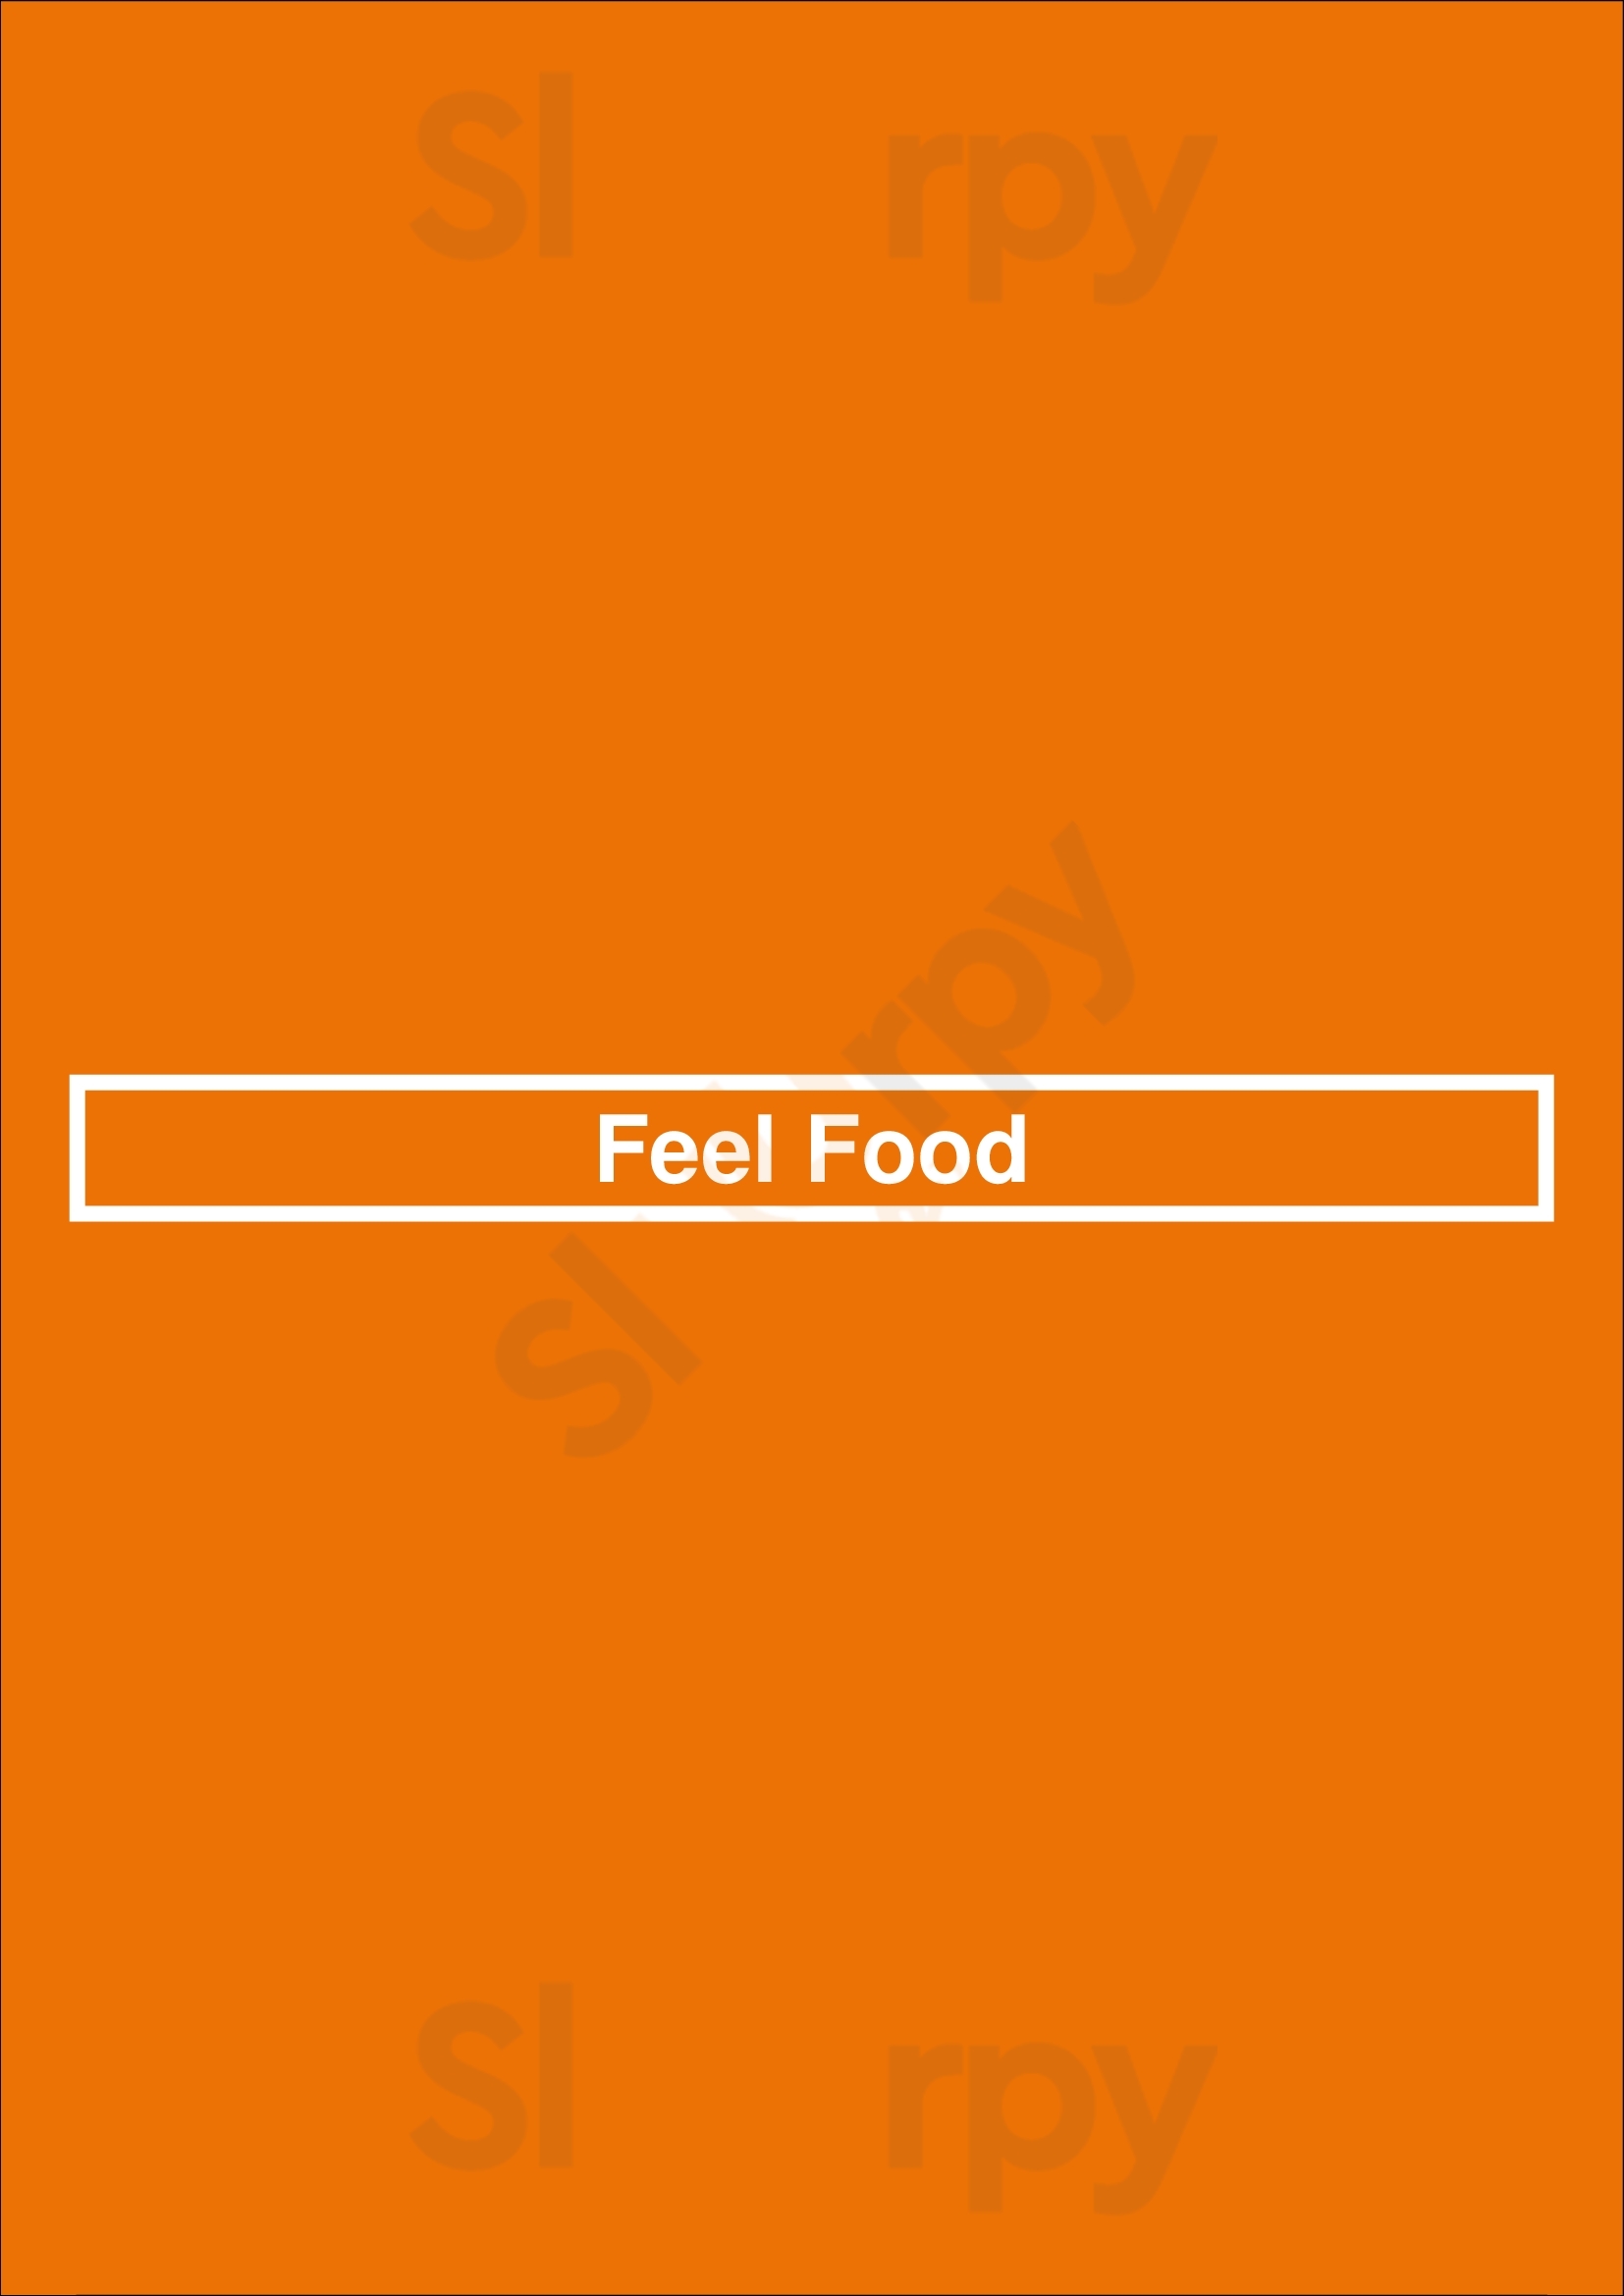 Feel Food Toulon Menu - 1